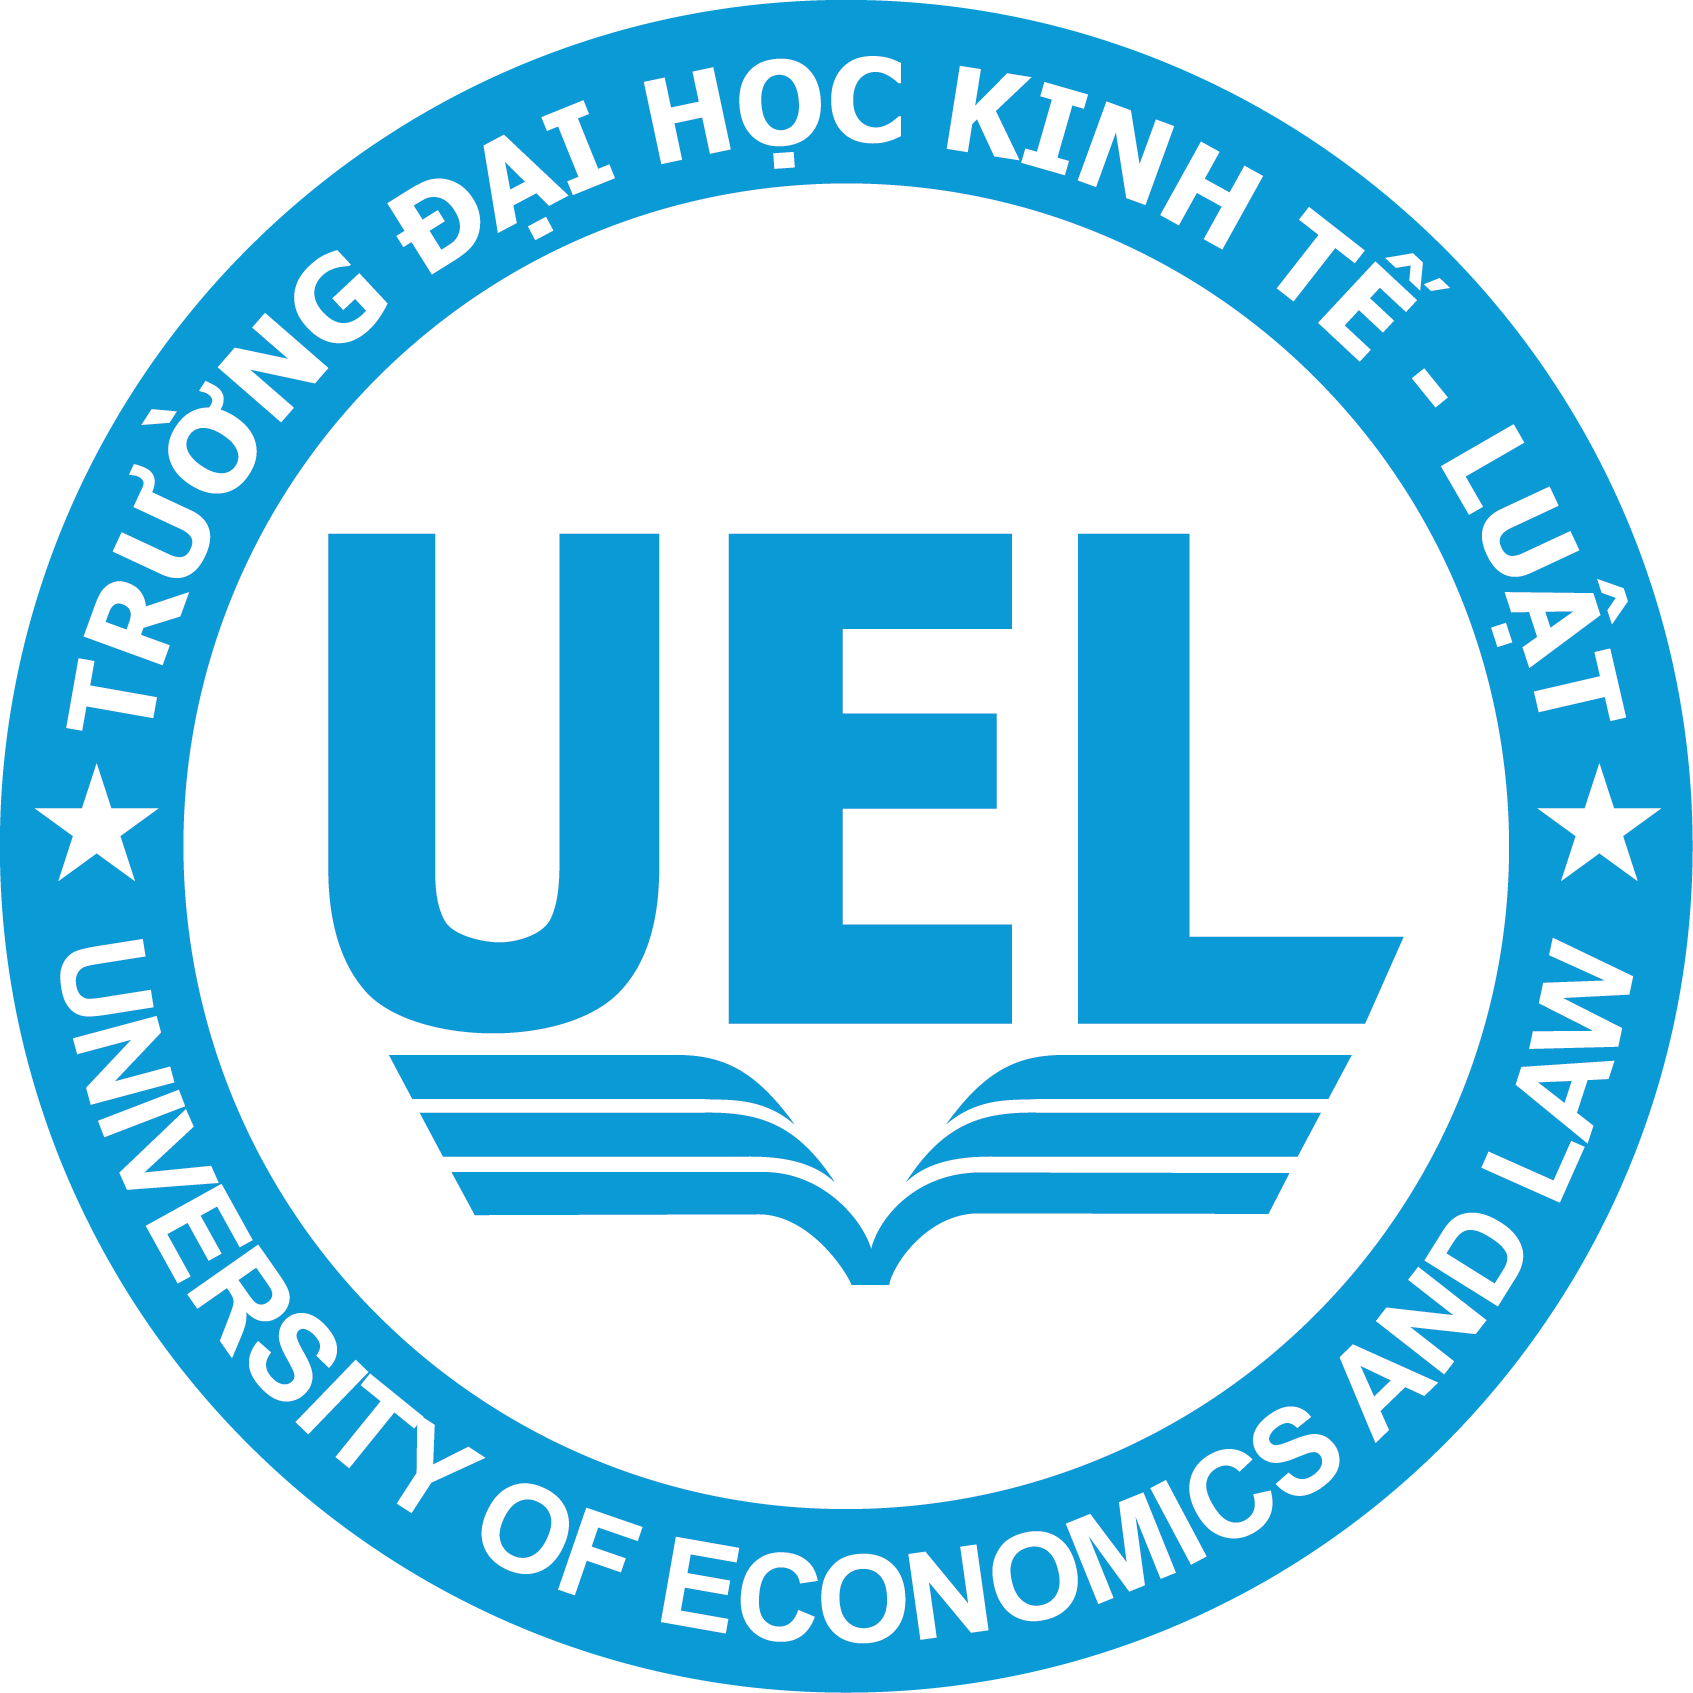 Logo UEL